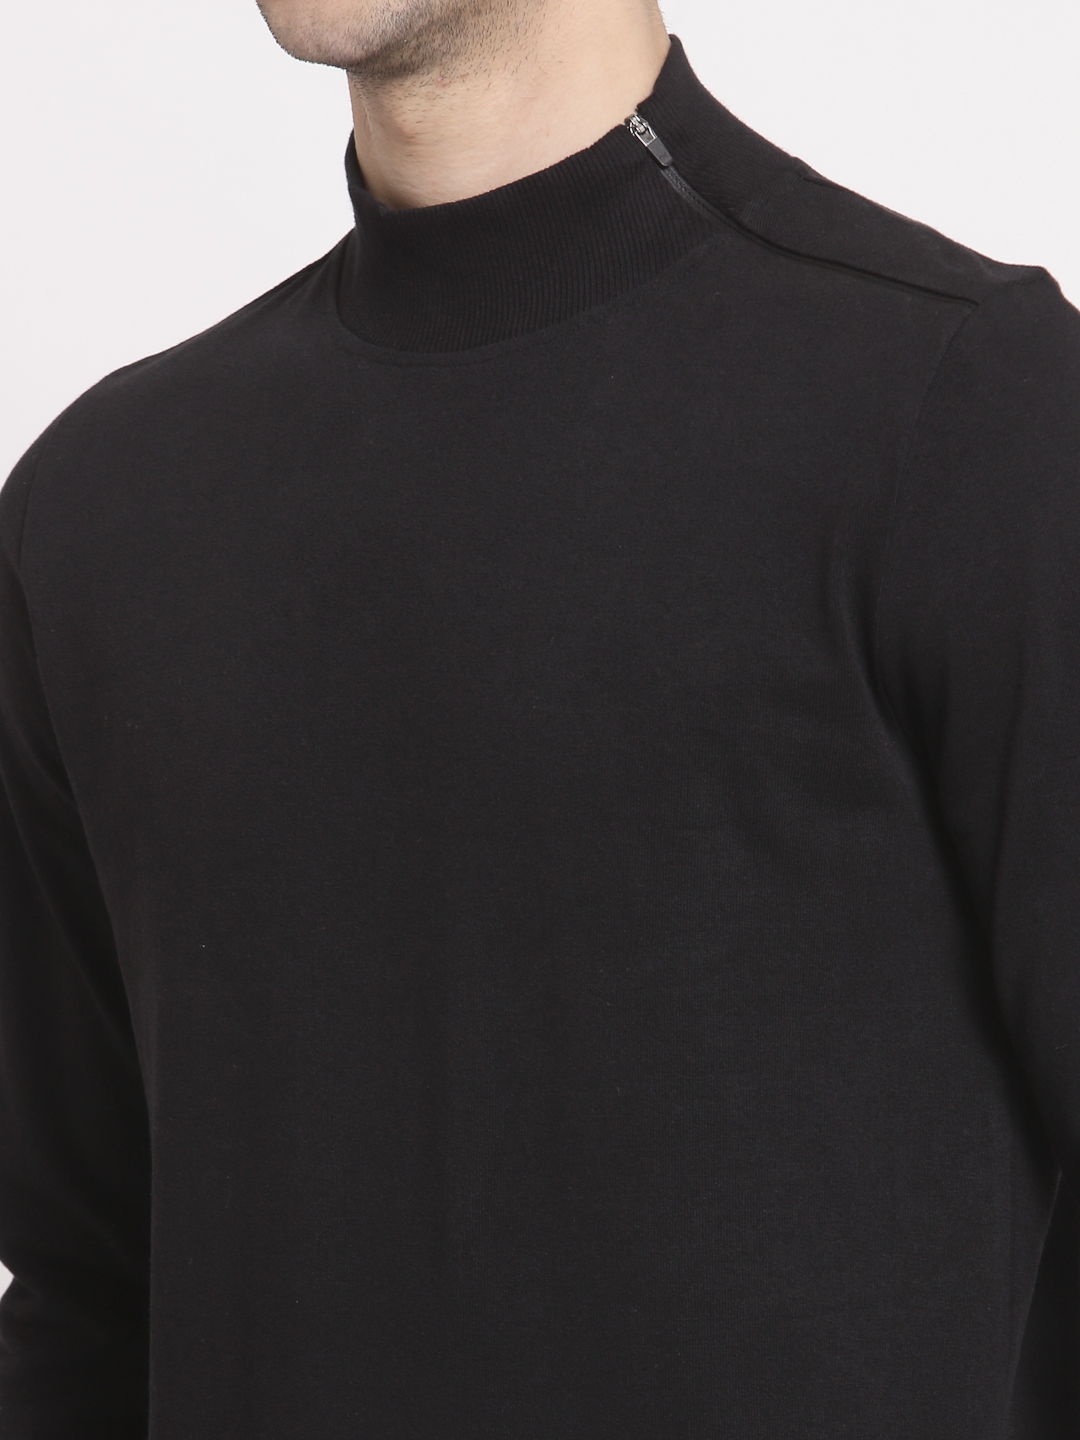 YOONOY | Men's Black Cotton Solid Sweatshirts 4